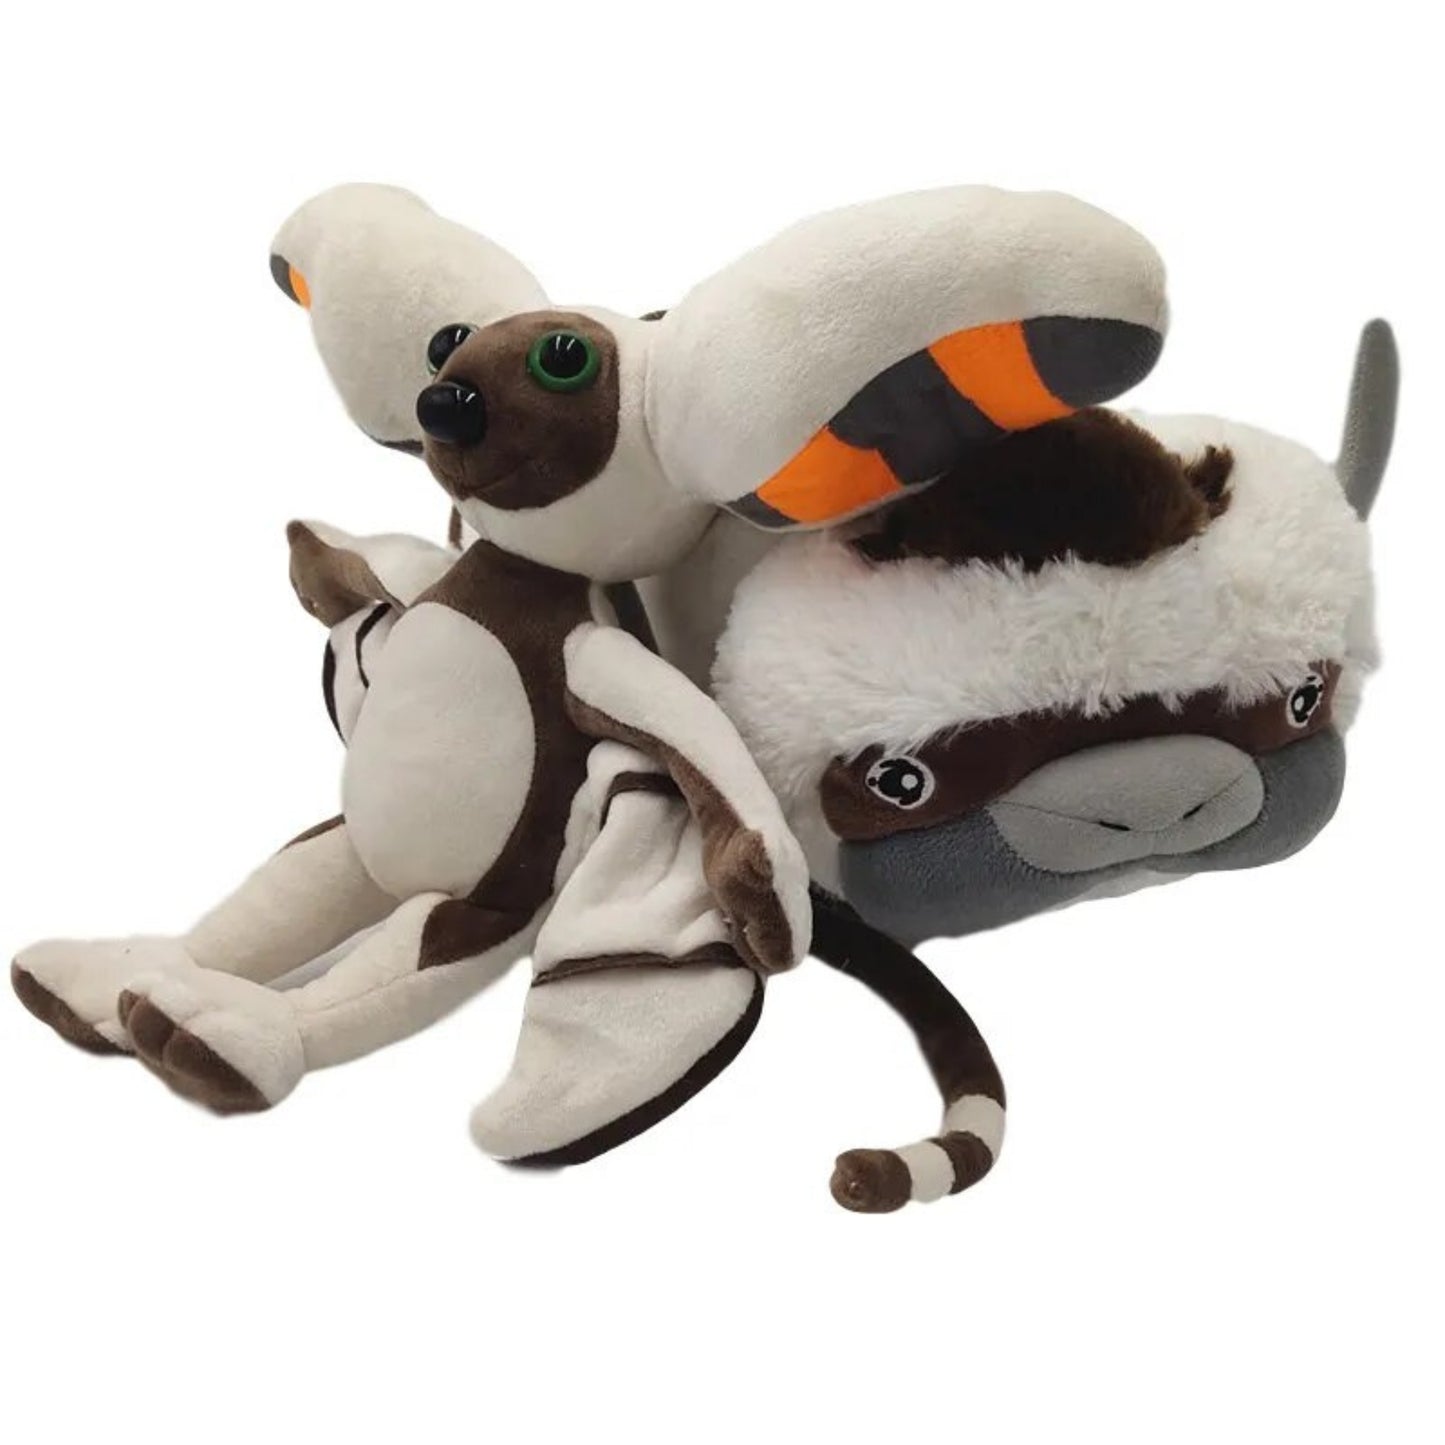 Avatar The Last Airbender Plush Momo Stuffed Animal Toy